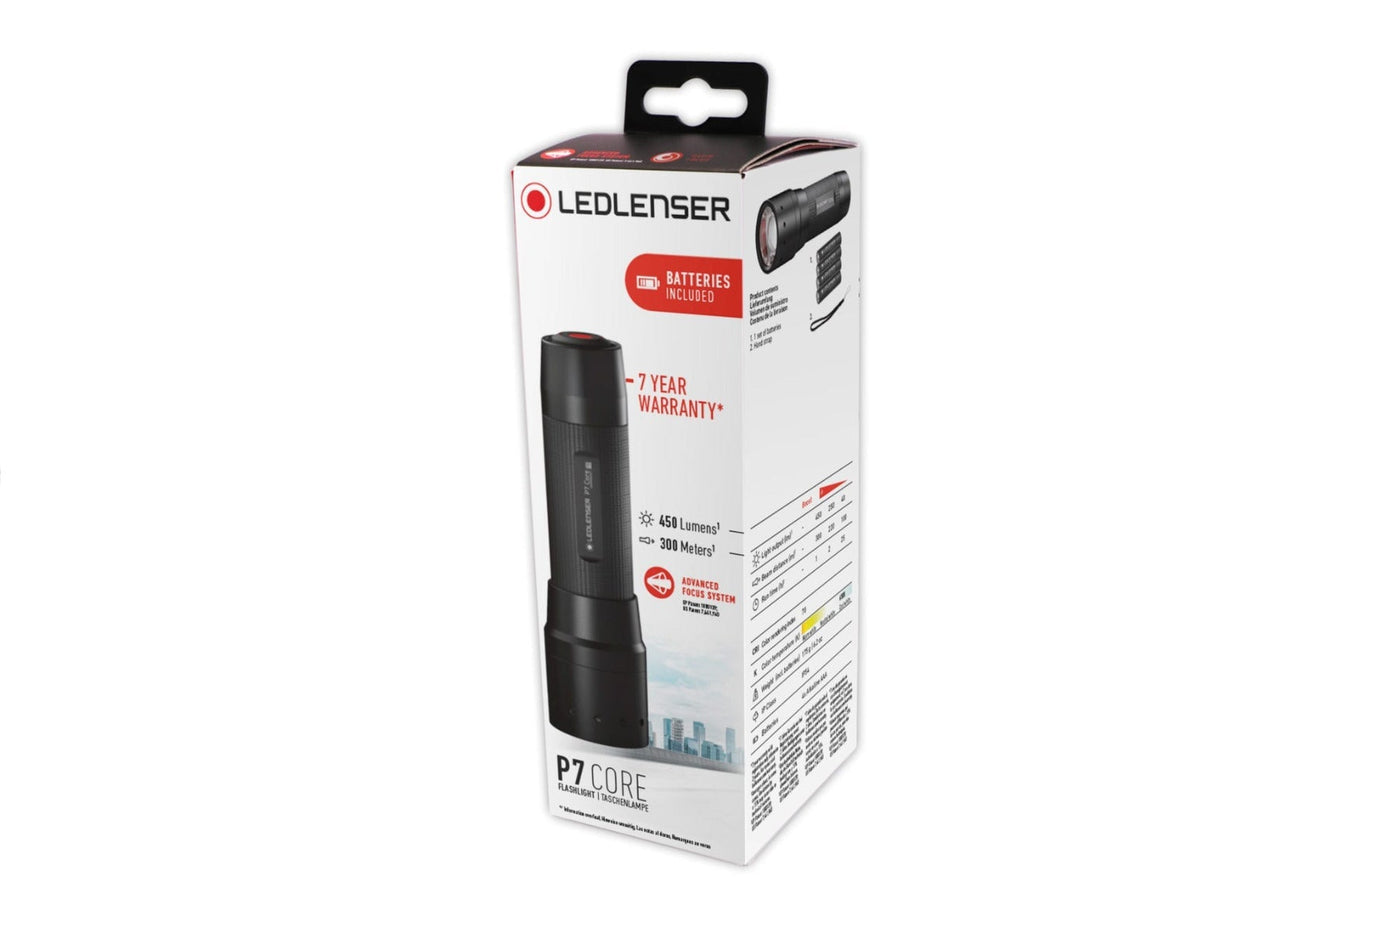 LED Lenser P7 CORE Torch 450 Lumens